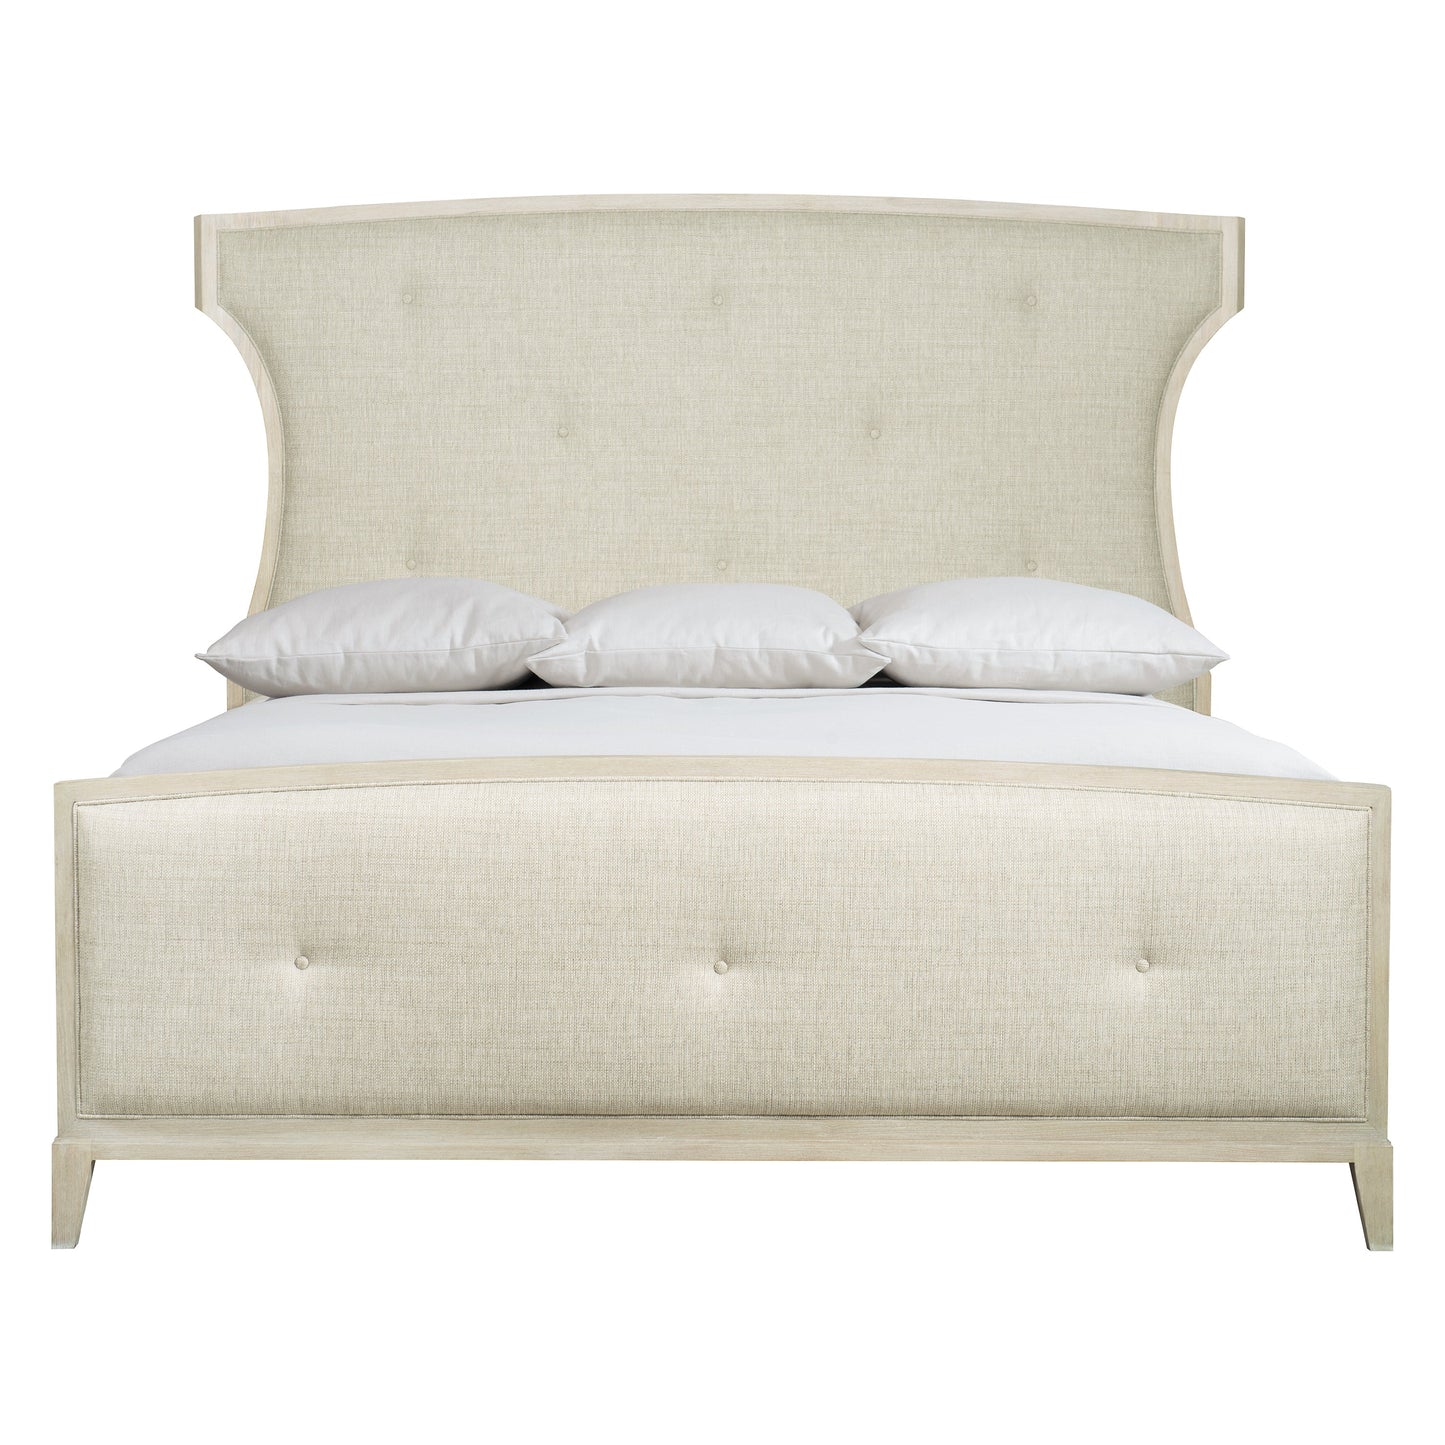 East Hampton Upholstered Bed